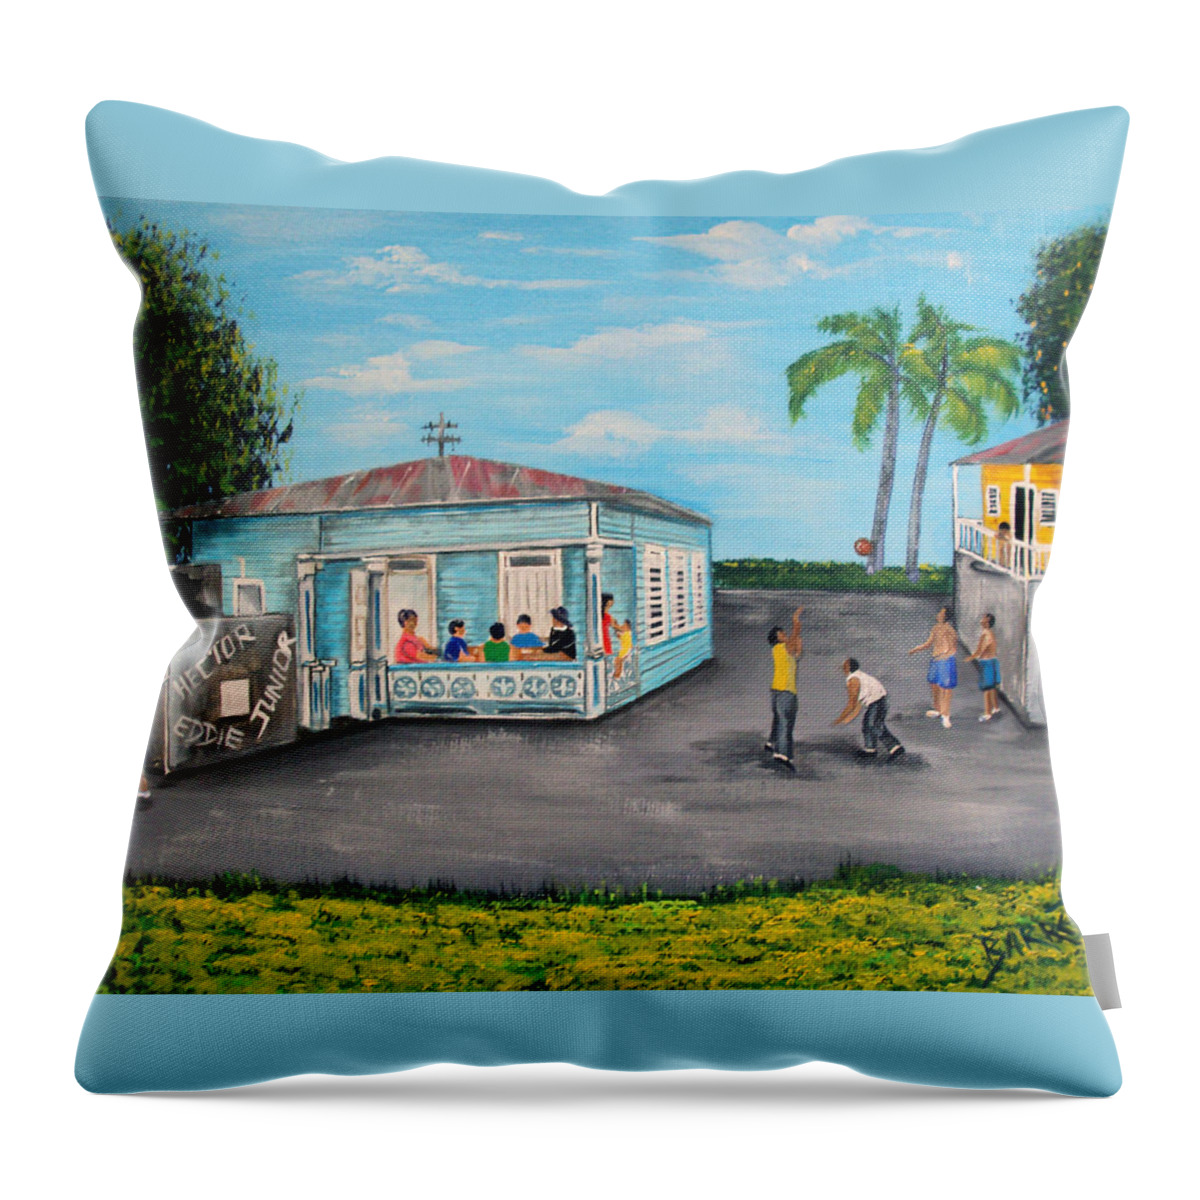 Puerto Rico Throw Pillow featuring the painting Juegos De Mi Infancia by Gloria E Barreto-Rodriguez